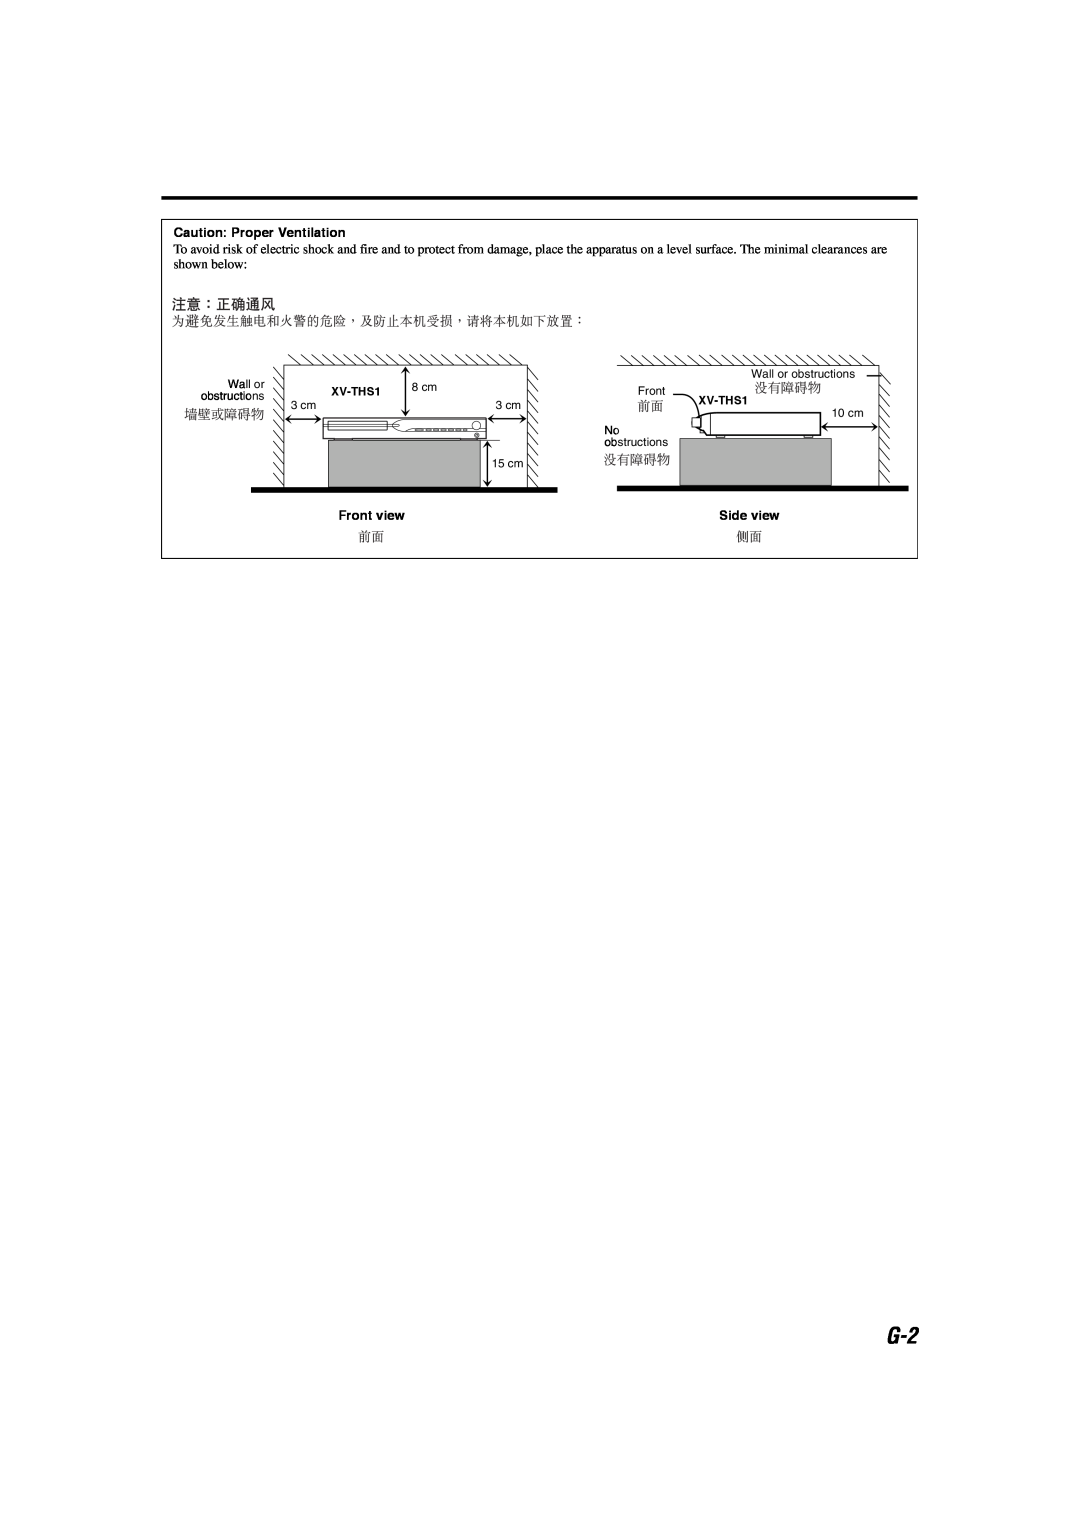 JVC GVT0141-003A manual Caution: Proper Ventilation, Front view, Side view, XV-THS1 